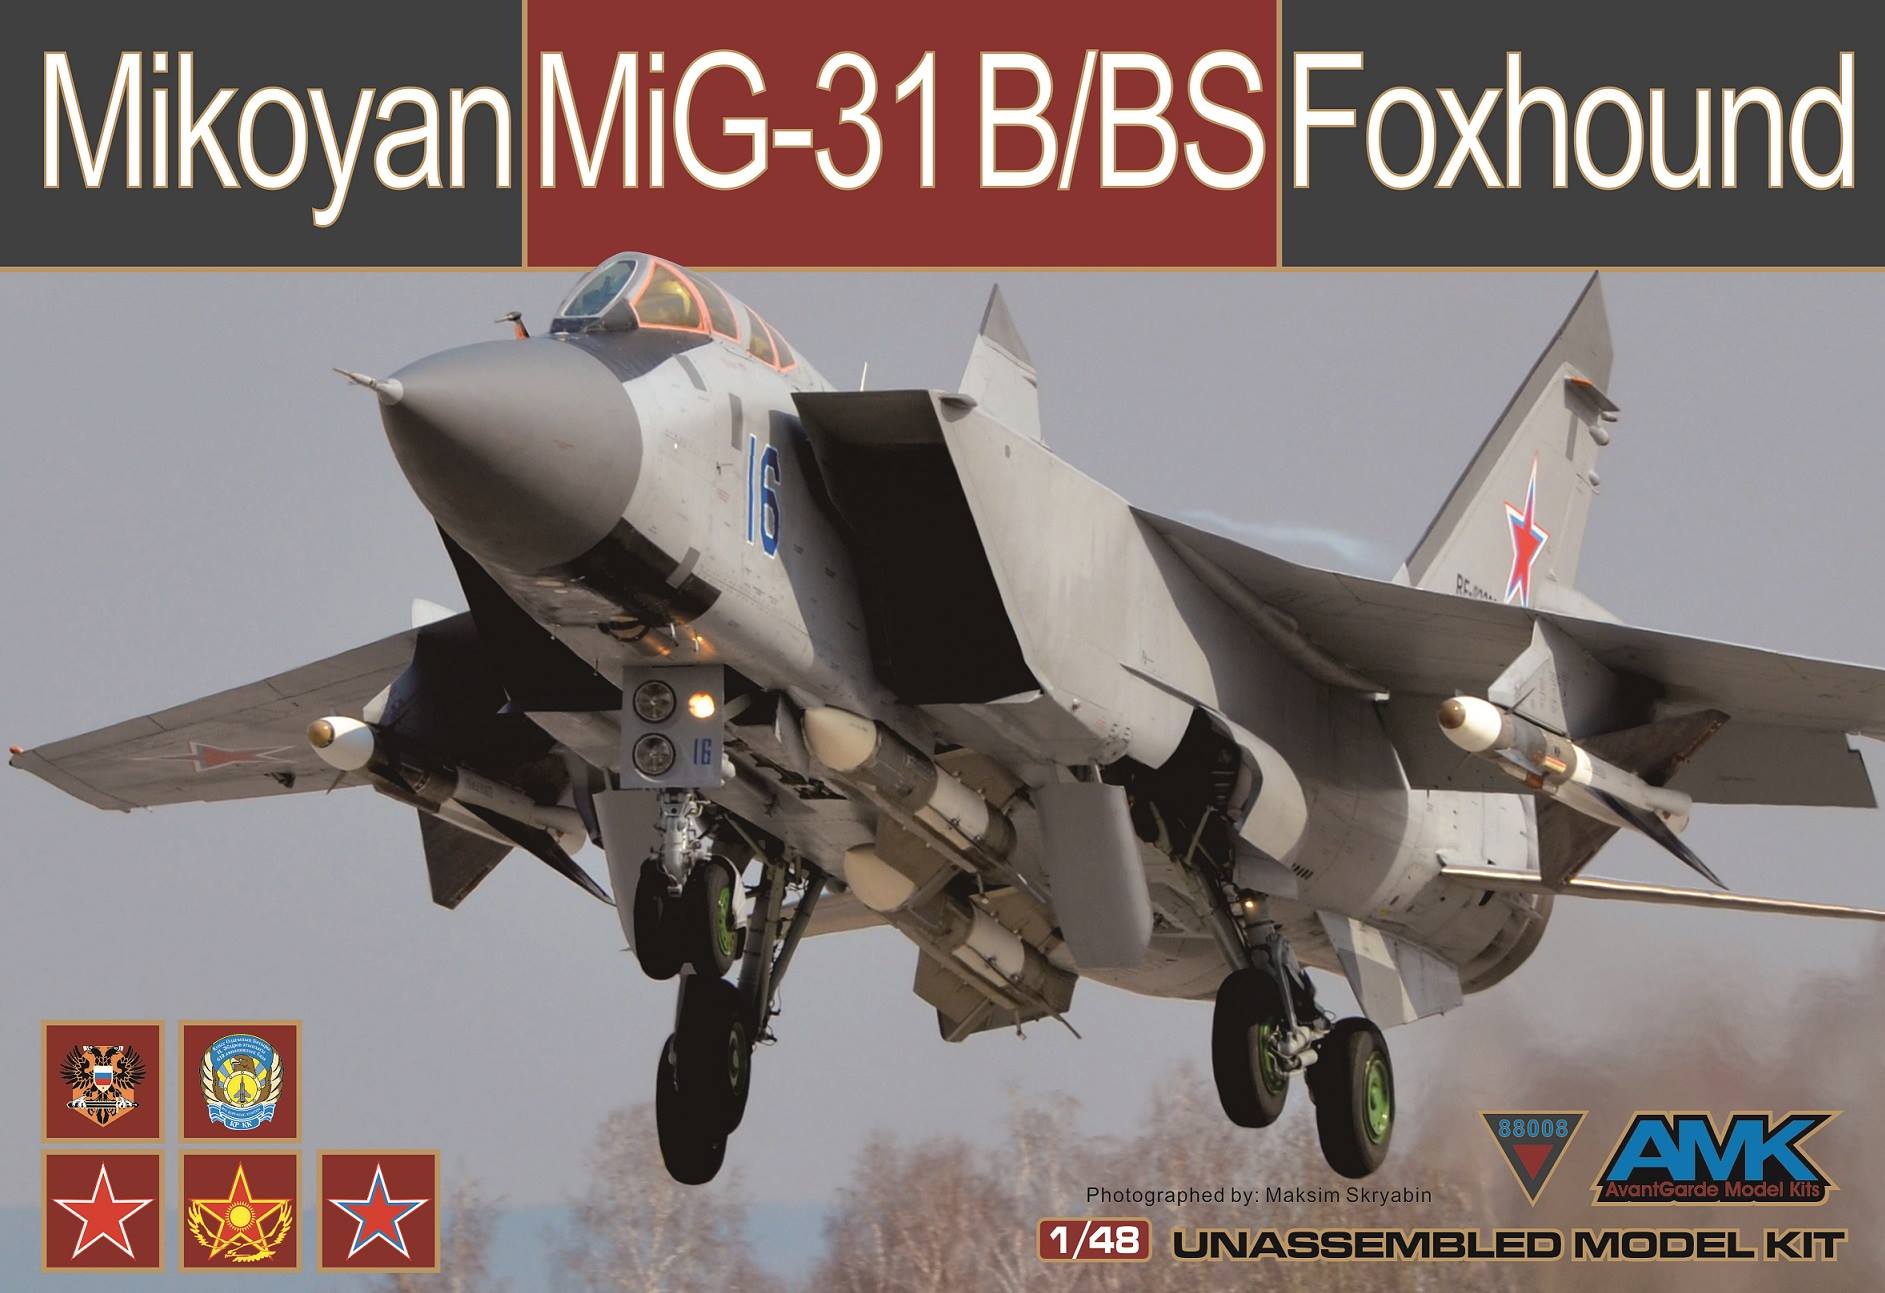 MiG-31B/BS Foxhound